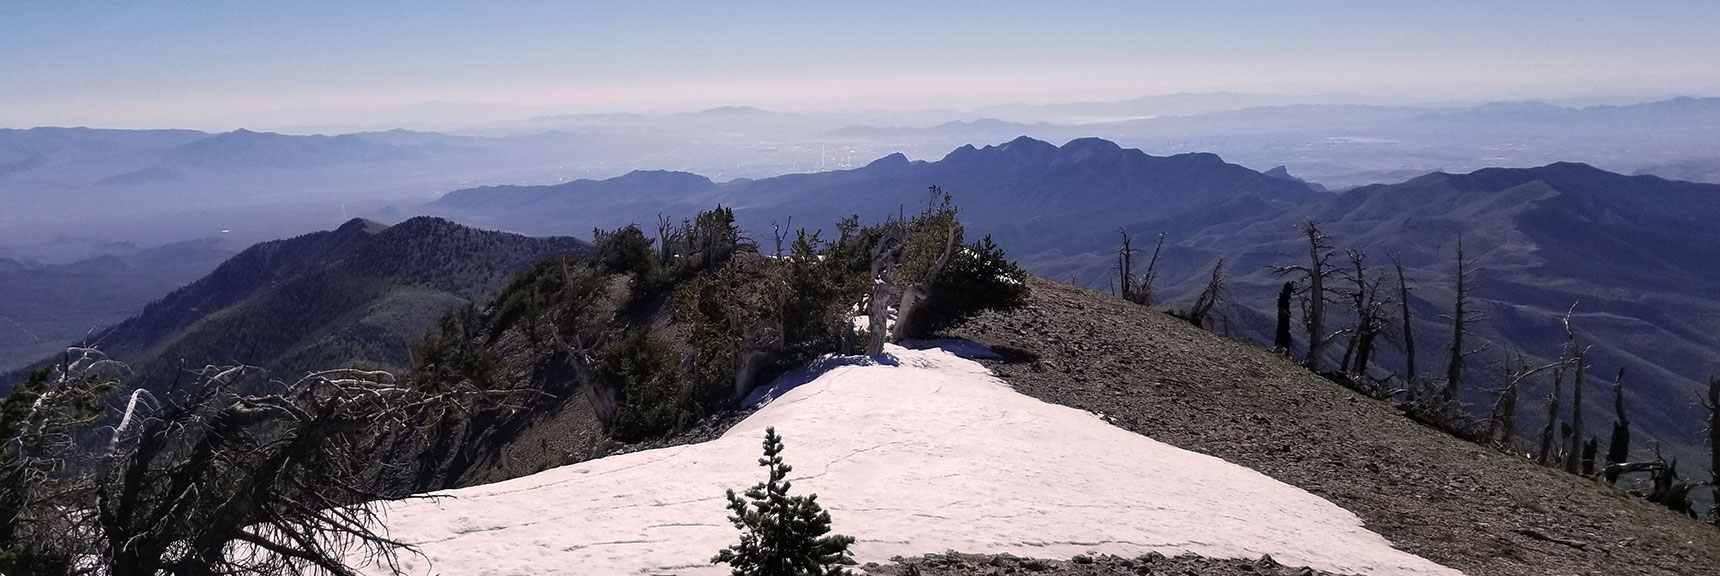 La Madre Mt. Viewed from Griffith Peak Summit in Mt. Charleston Wilderness